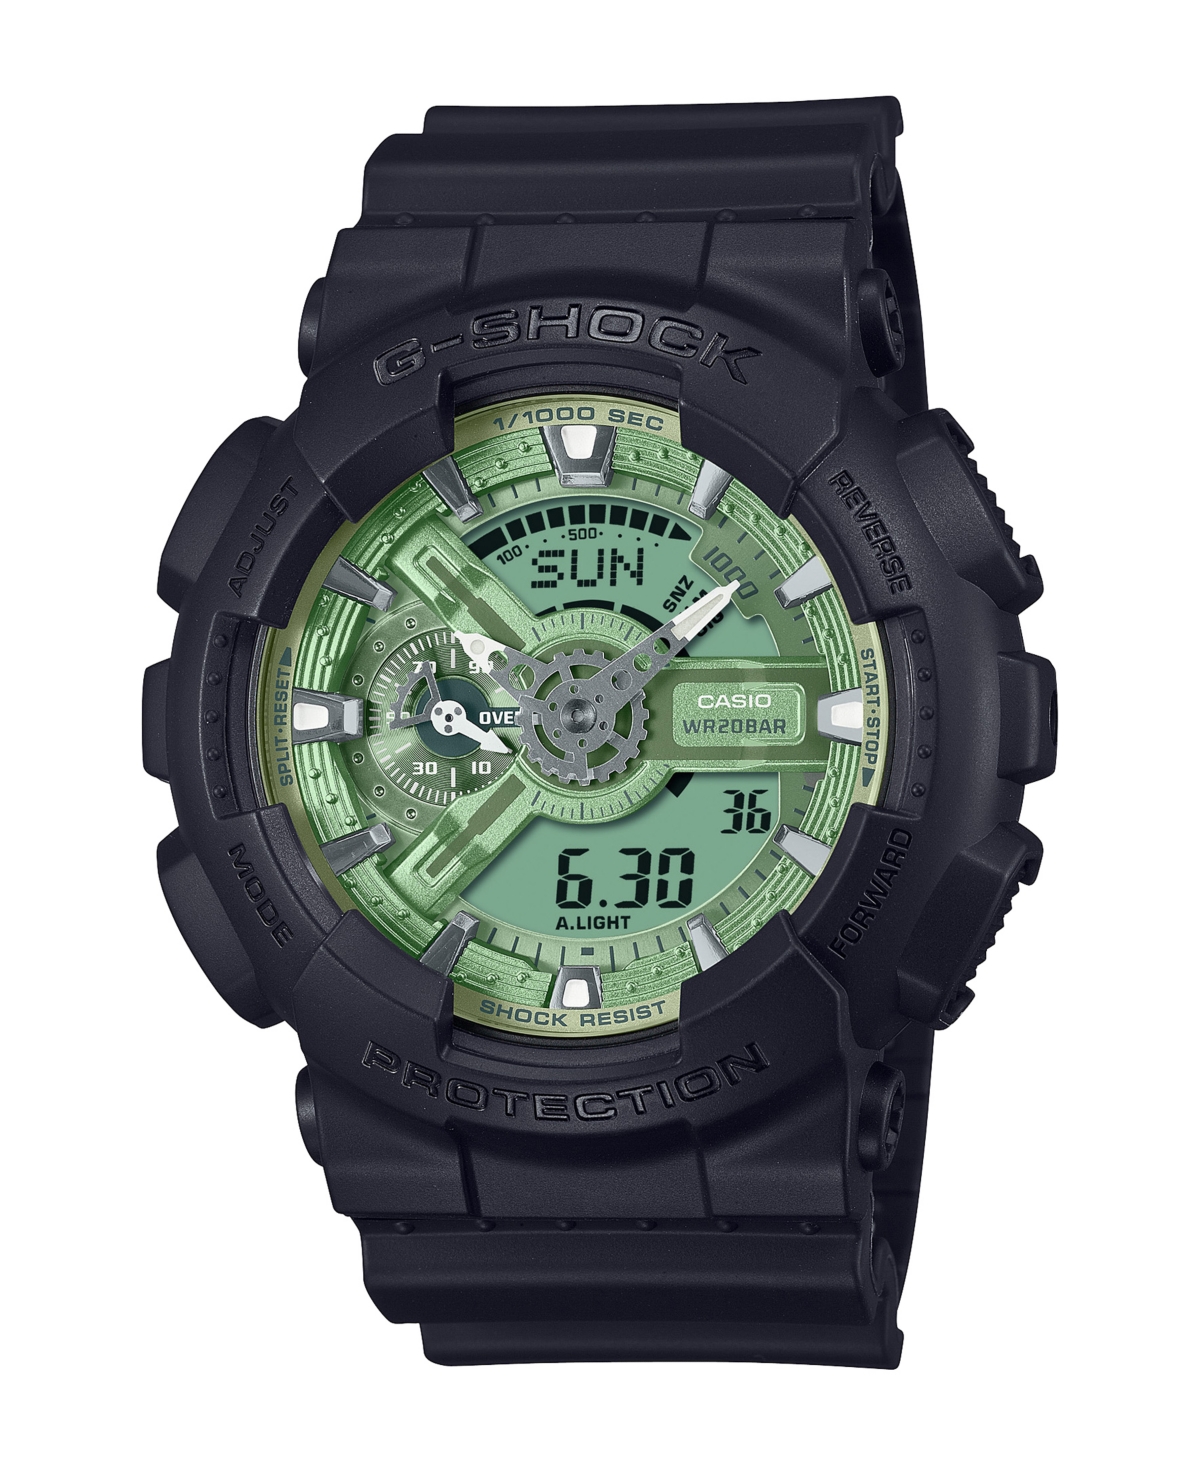 Men's Analog Digital Black Resin Watch, 51.2mm, GA110CD-1A3 - Black